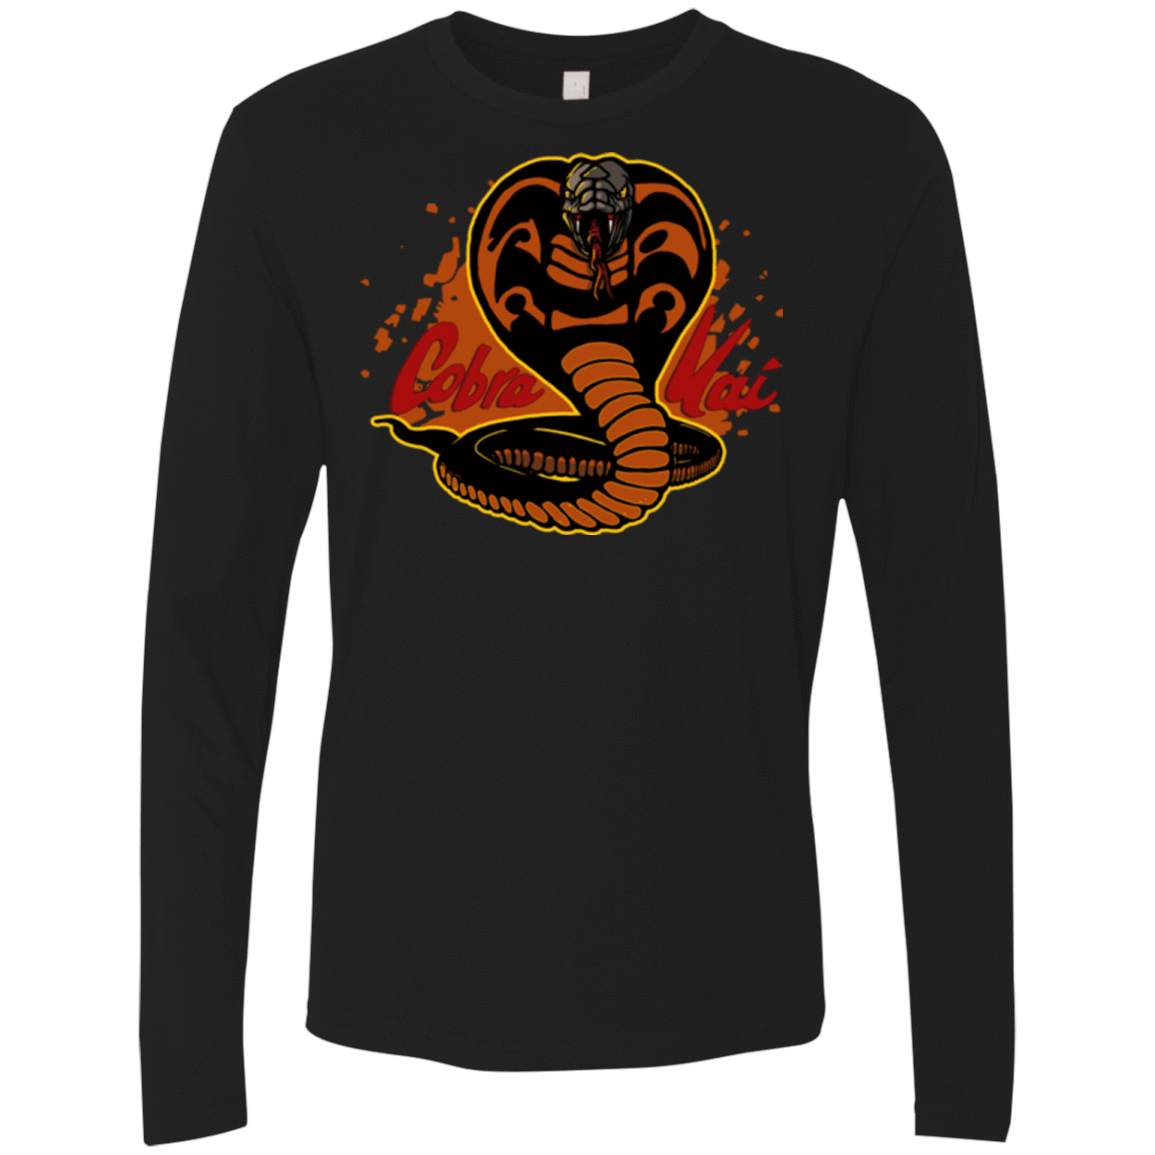 T-Shirts Black / S Familiar Reptile Men's Premium Long Sleeve